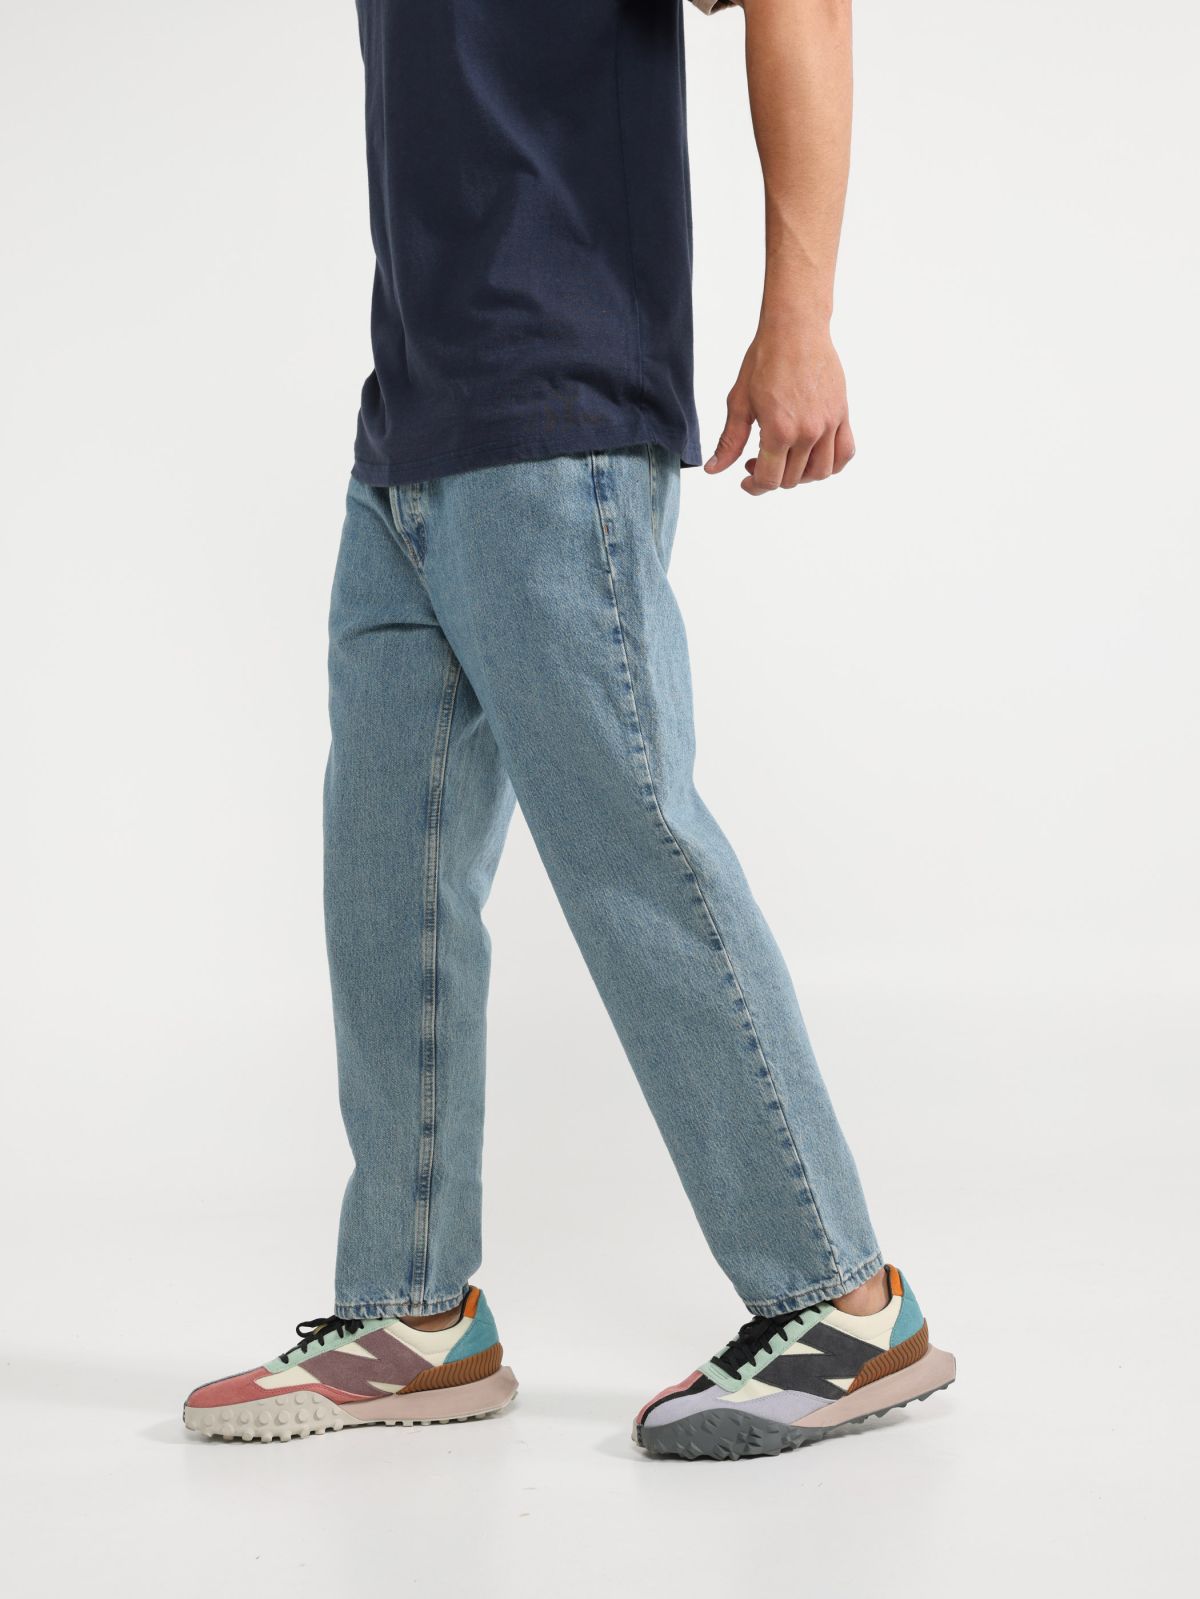  ג'ינס בגזרה ישרה של URBAN OUTFITTERS